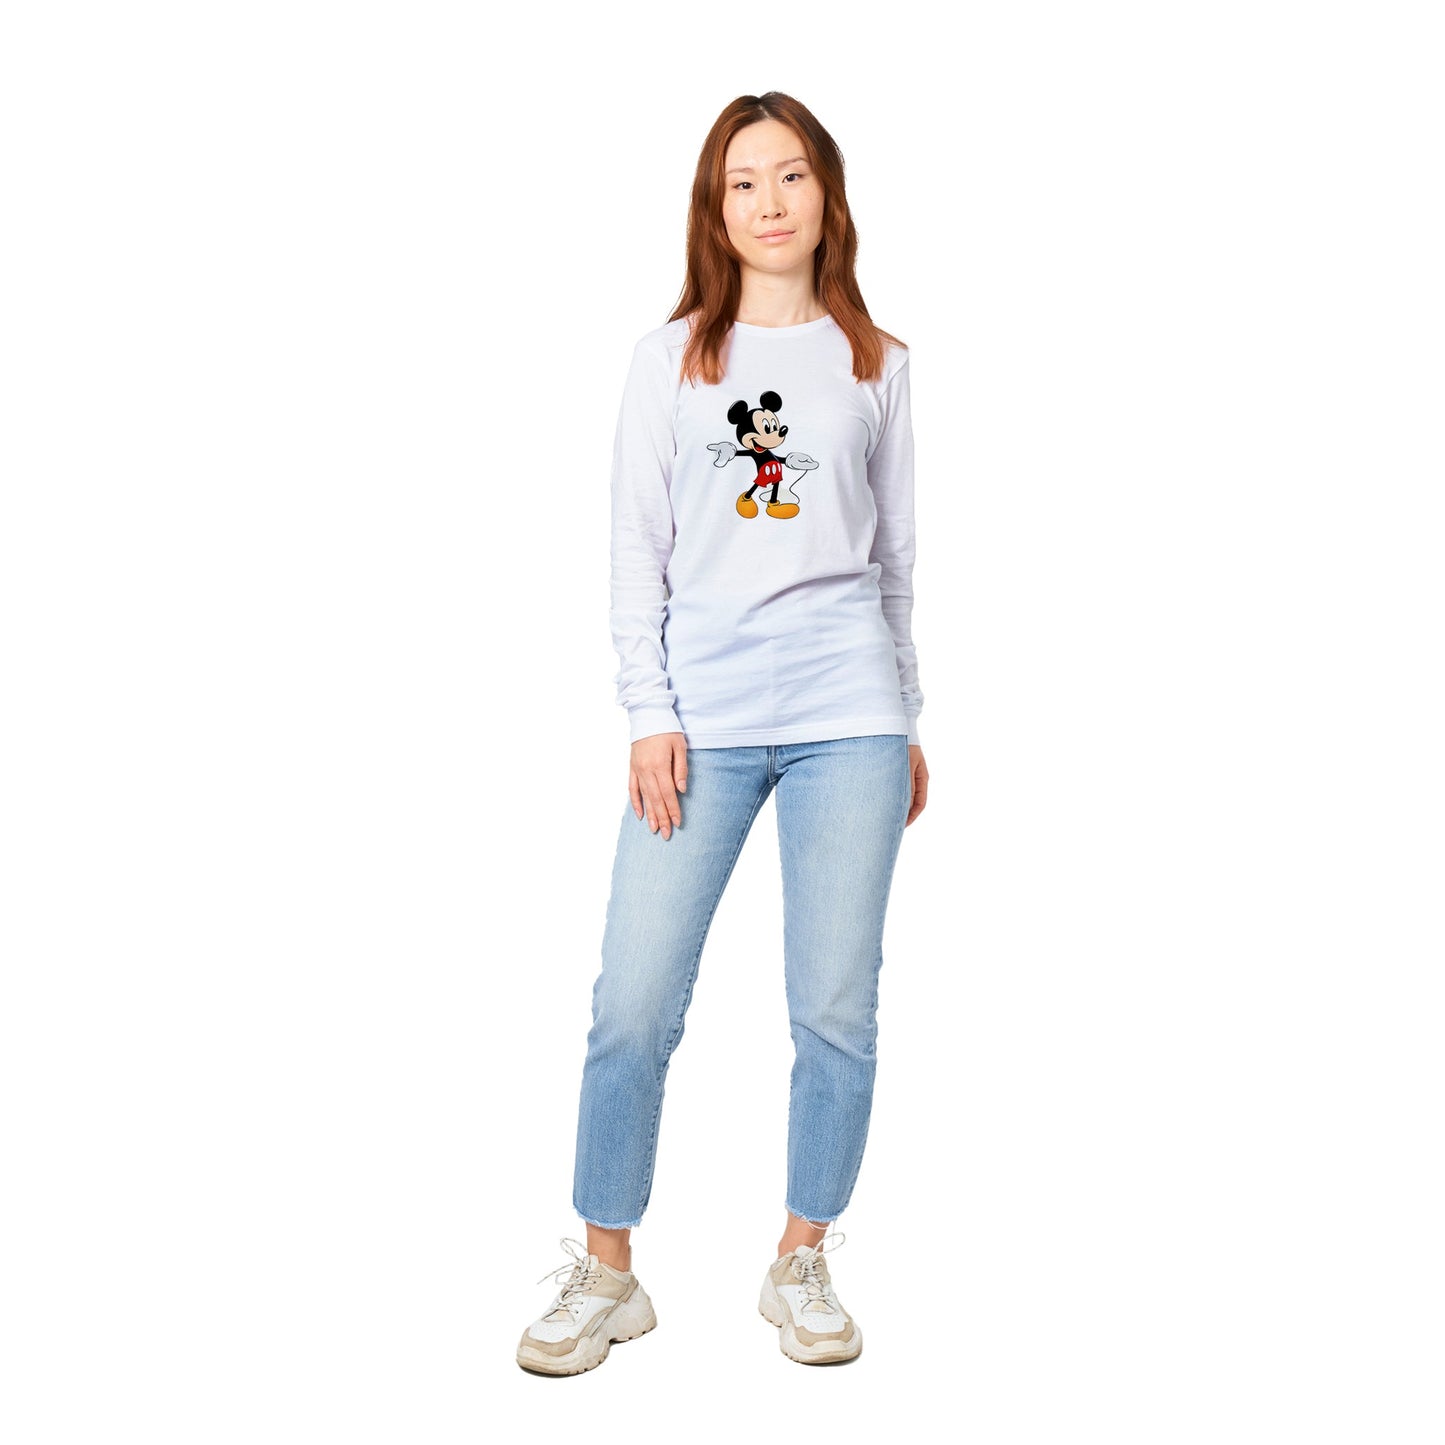 Unisex Langarm T-Shirt/Mickey